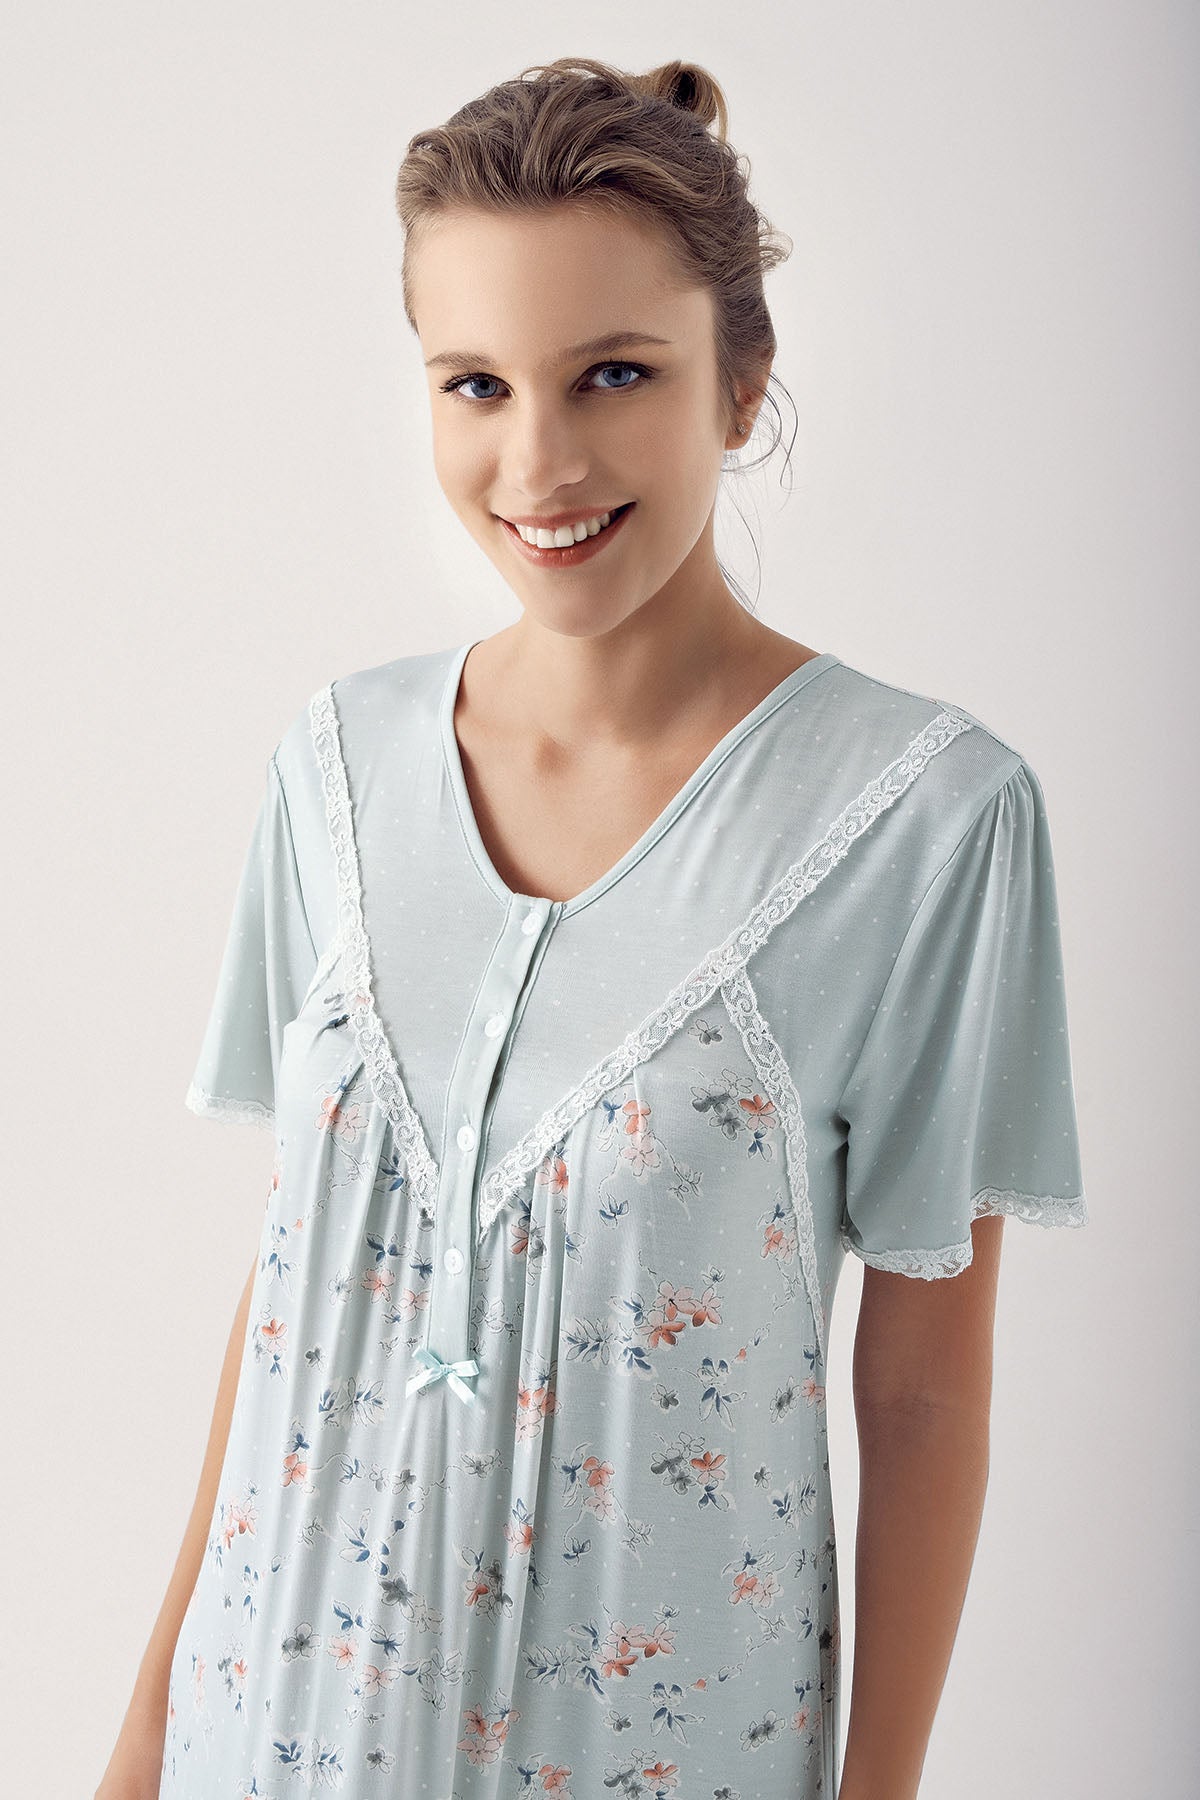 Shopymommy 14121 Patterned V-Neck Plus Size Maternity & Nursing Nightgown Green